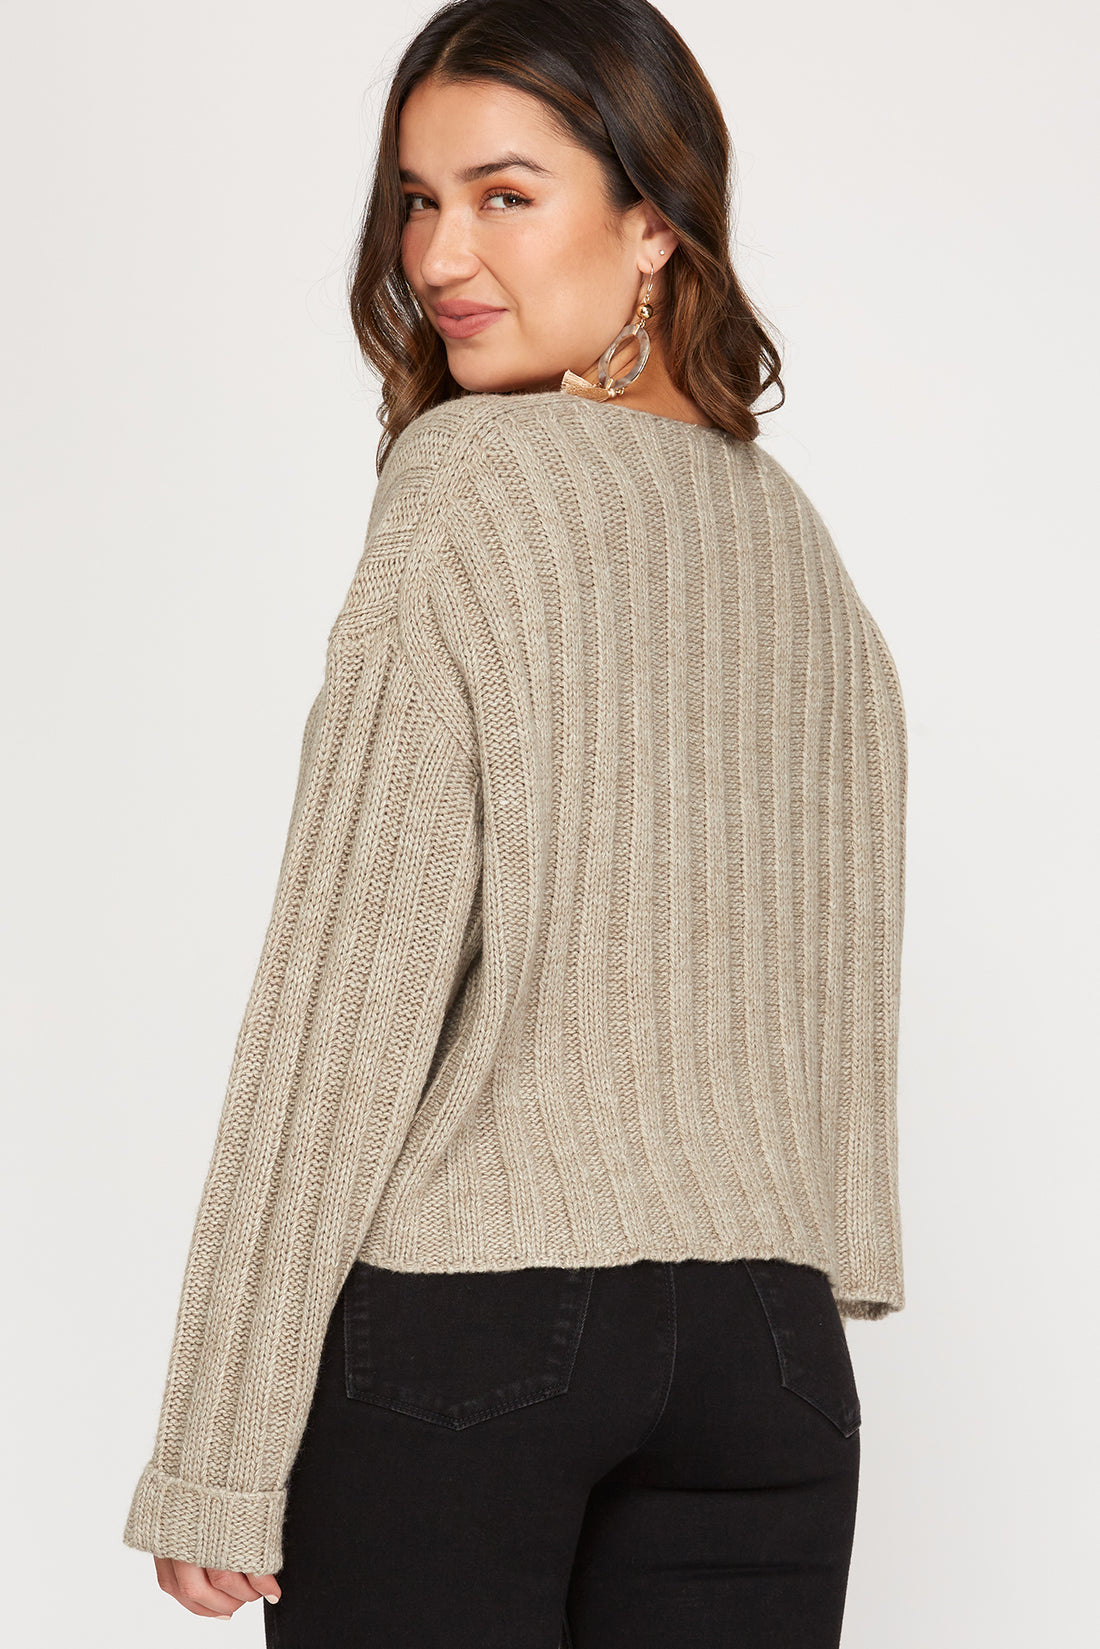 Skylight Sweater Top